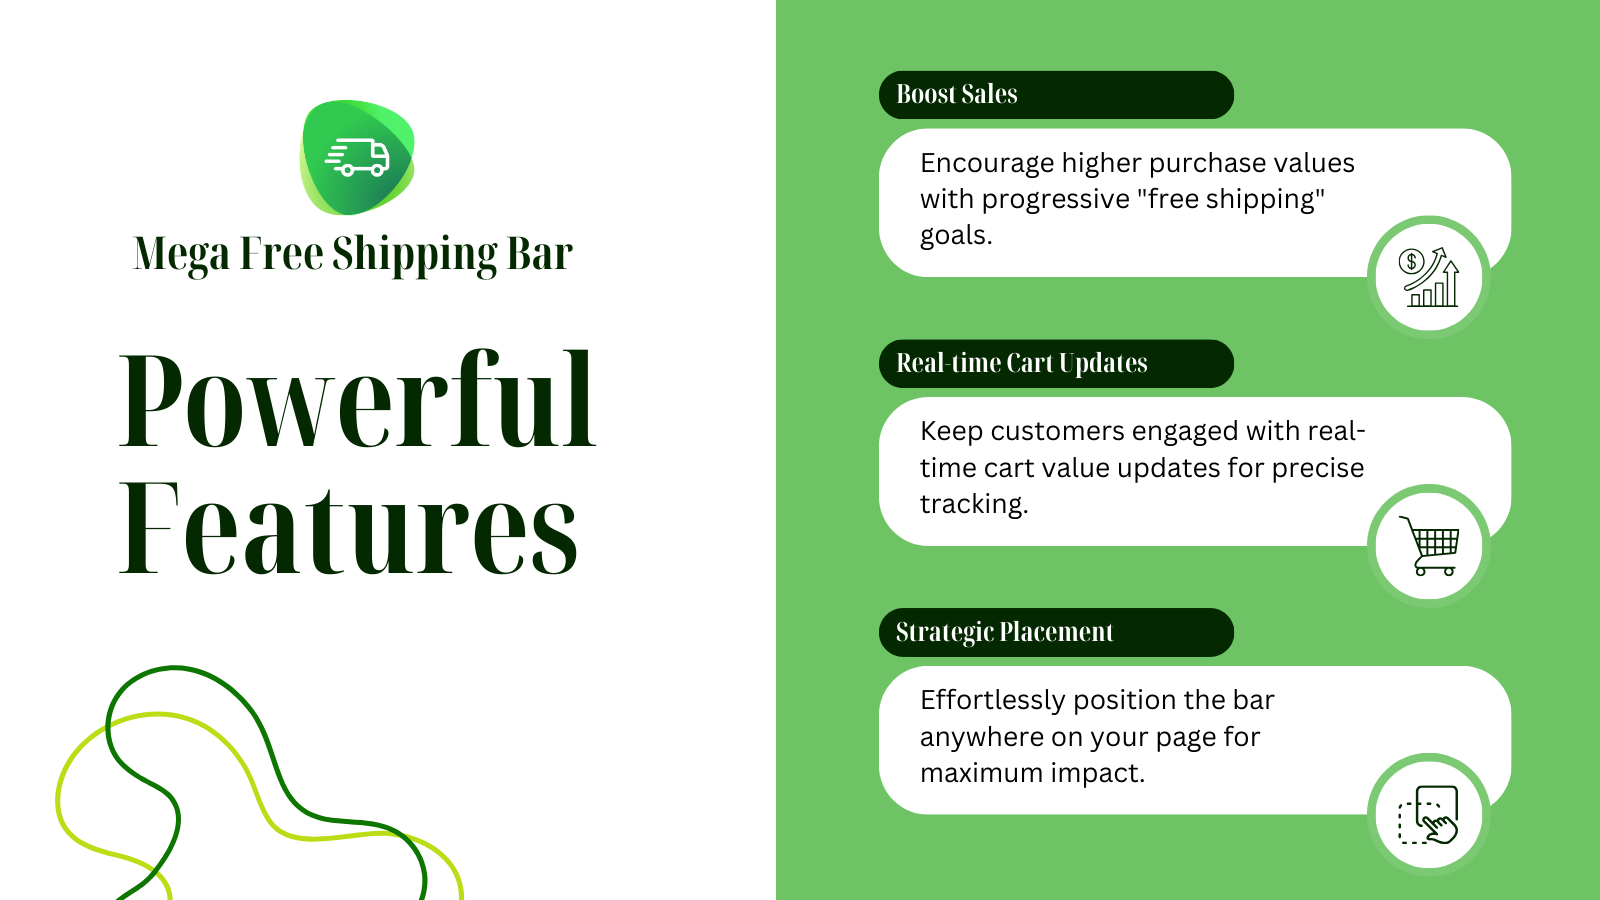 Mega Free Shipping Bar - Encourage higher purchase values